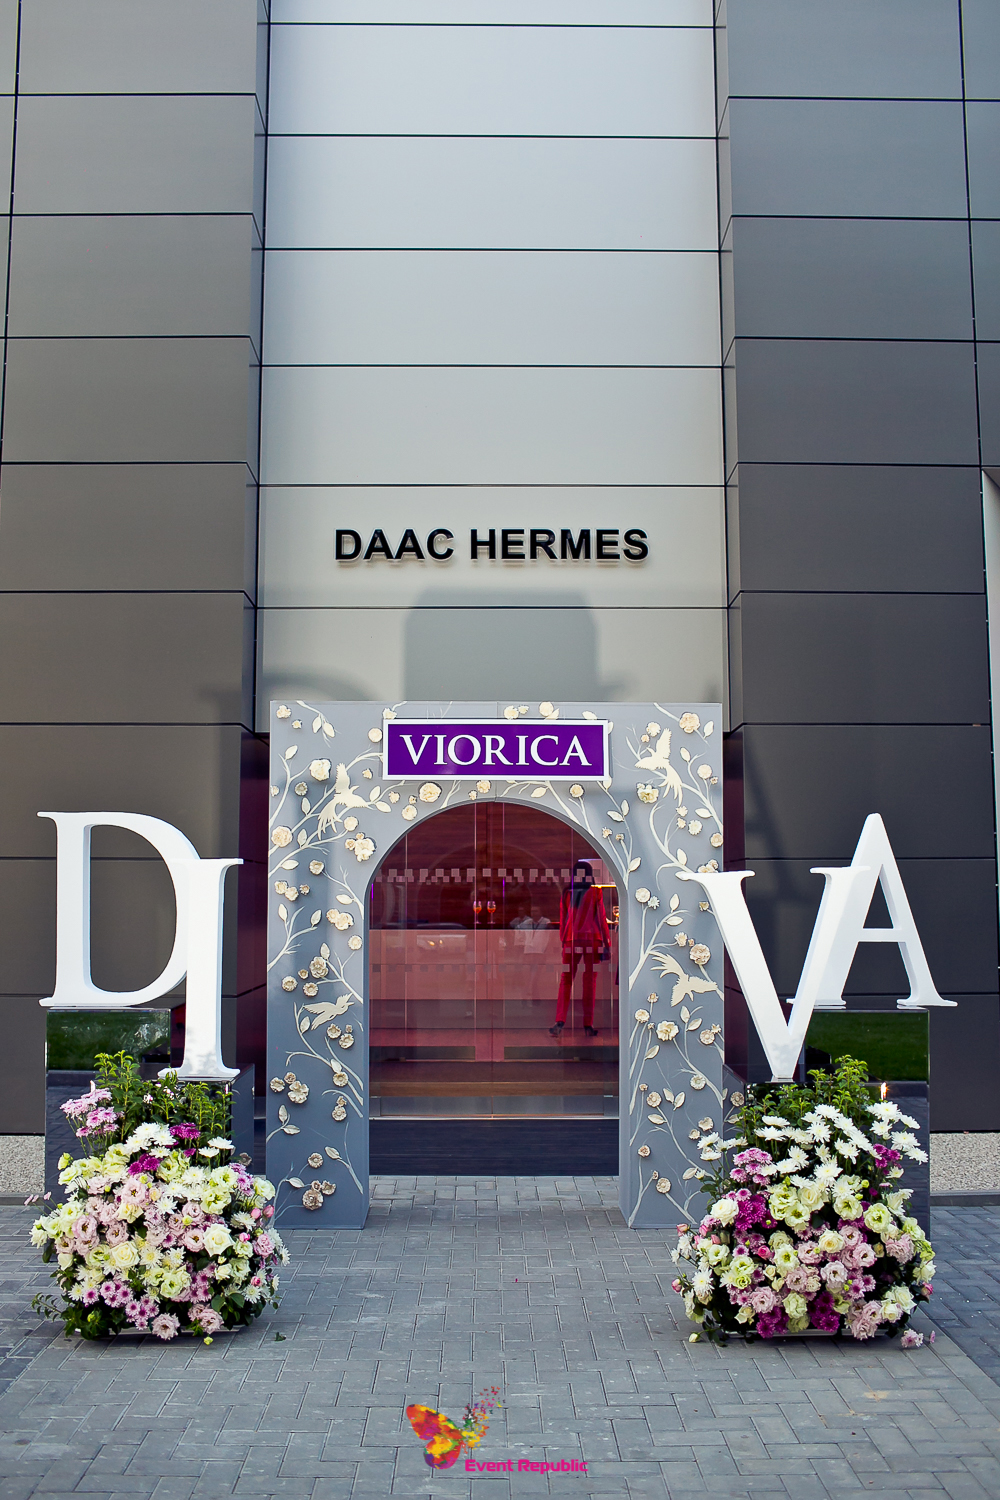 DIVA 2018  (Digital Ifluencer Viorica Awards)